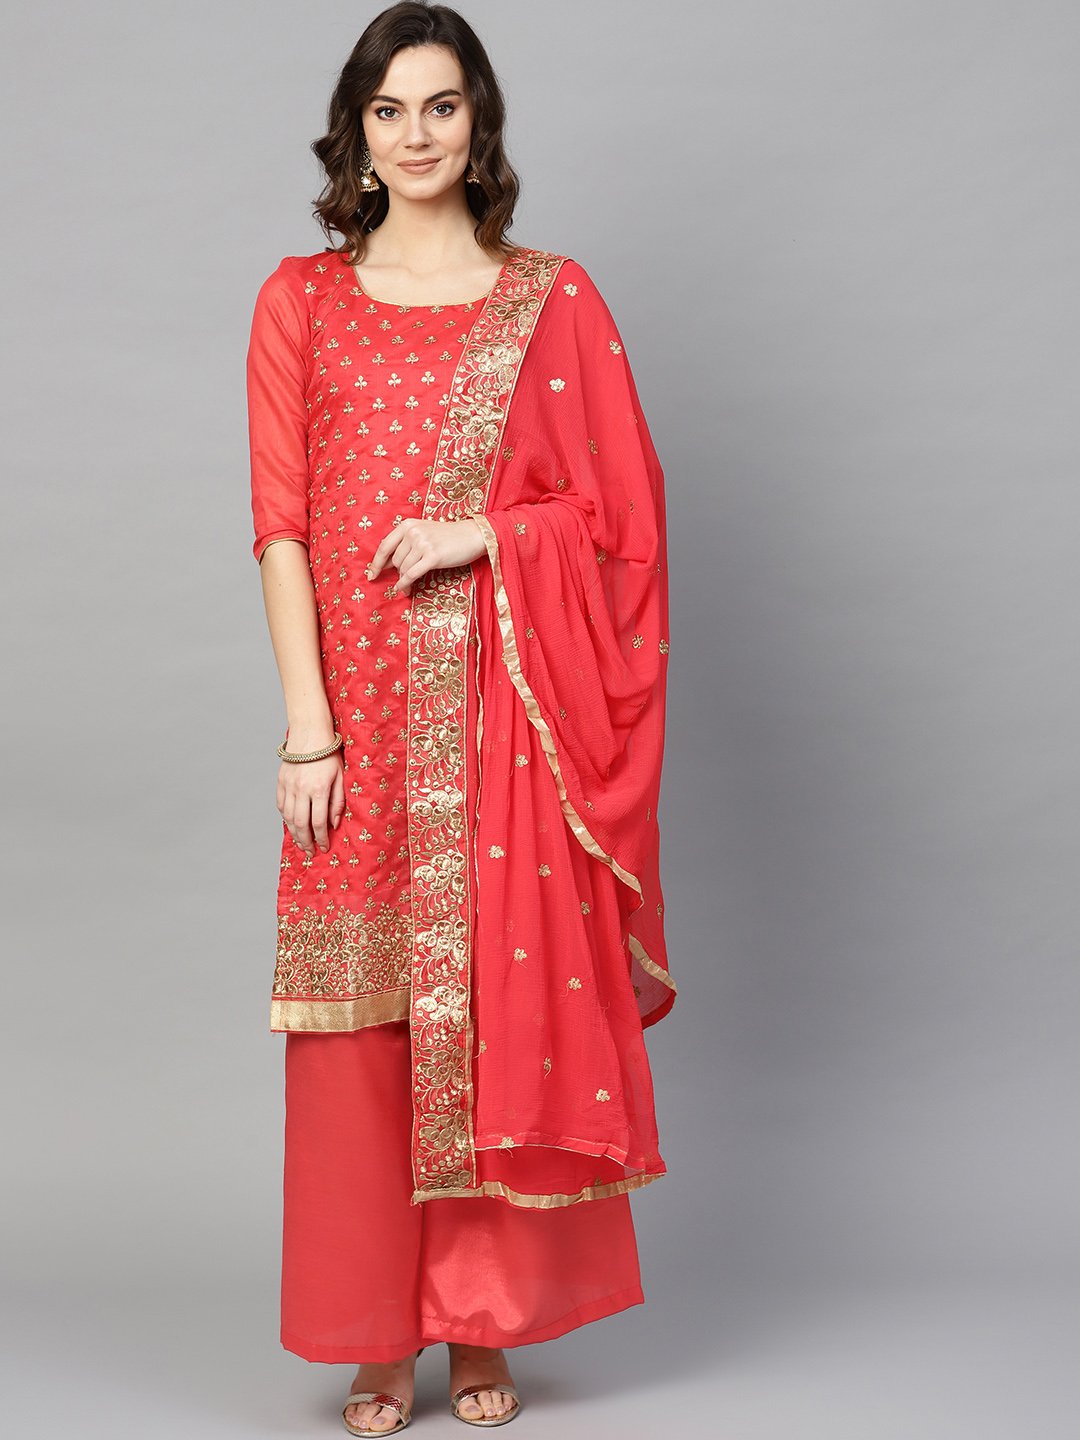 Ishin Women's Chanderi Cotton Red Embellished A-Line Kurta Palazzo Dupatta Set